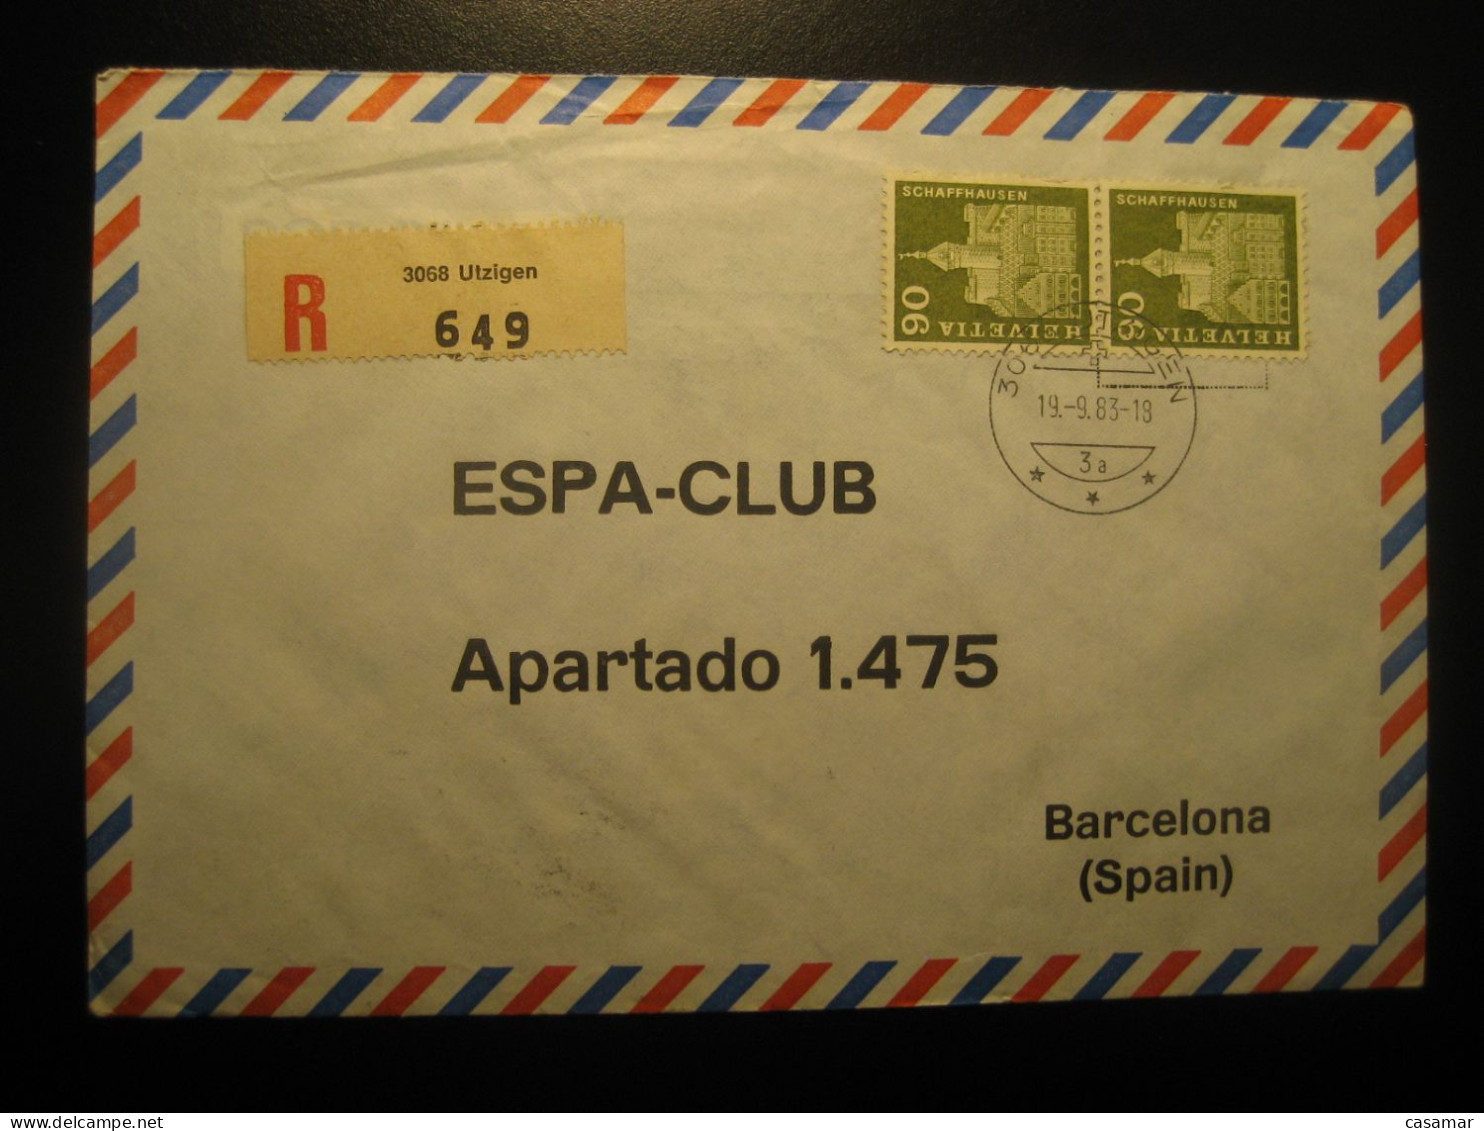 UTZIGEN 1983 Registered Air Mail Cancel Cover SWITZERLAND - Storia Postale